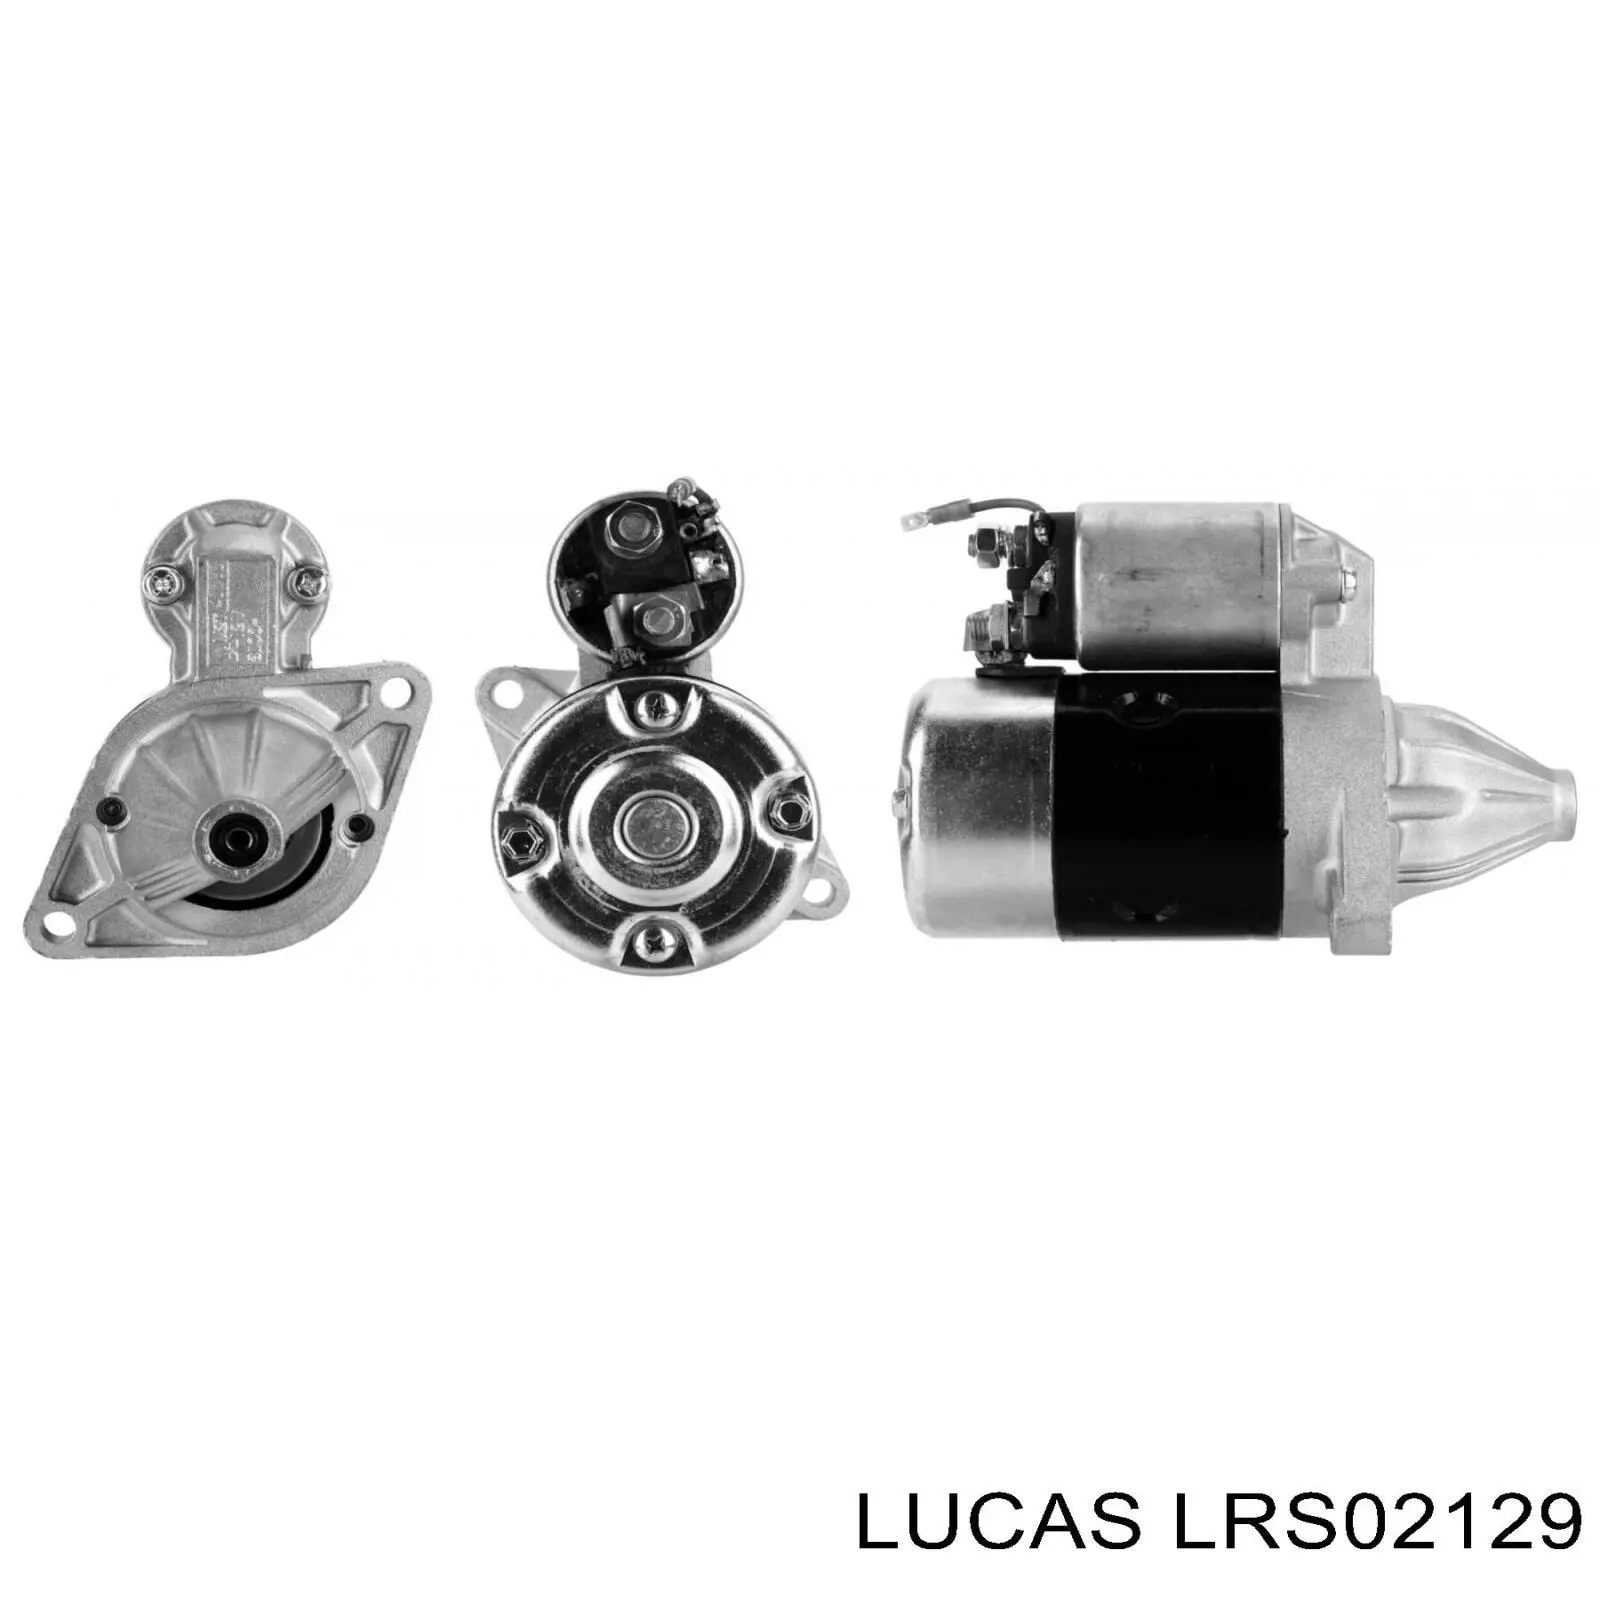 LRS02129 Lucas motor de arranque